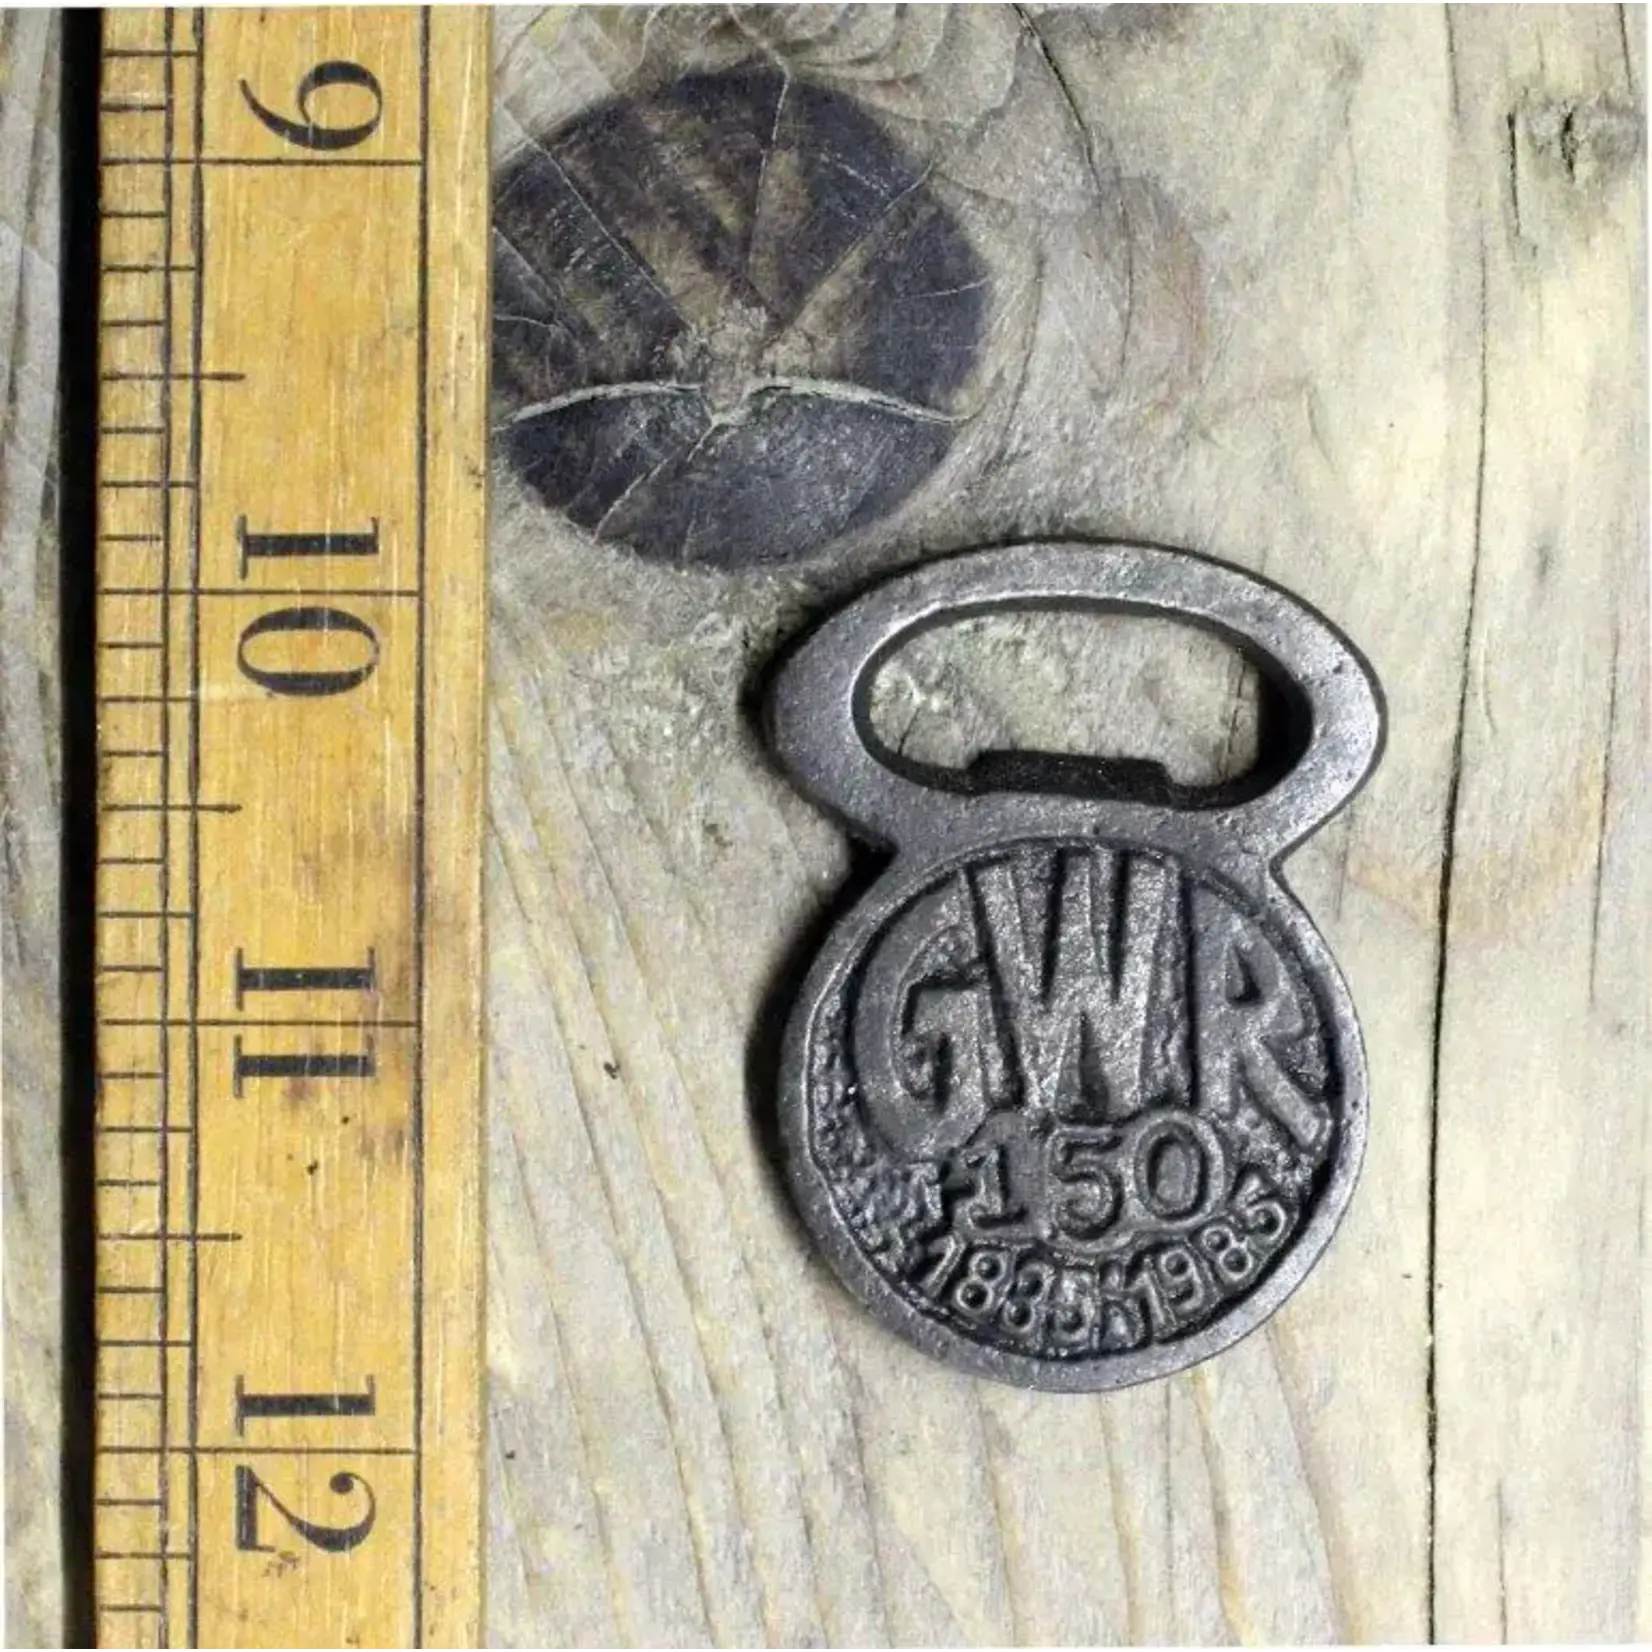 IRON RANGE Bottle Opener Handheld Penny Style GWR 1833